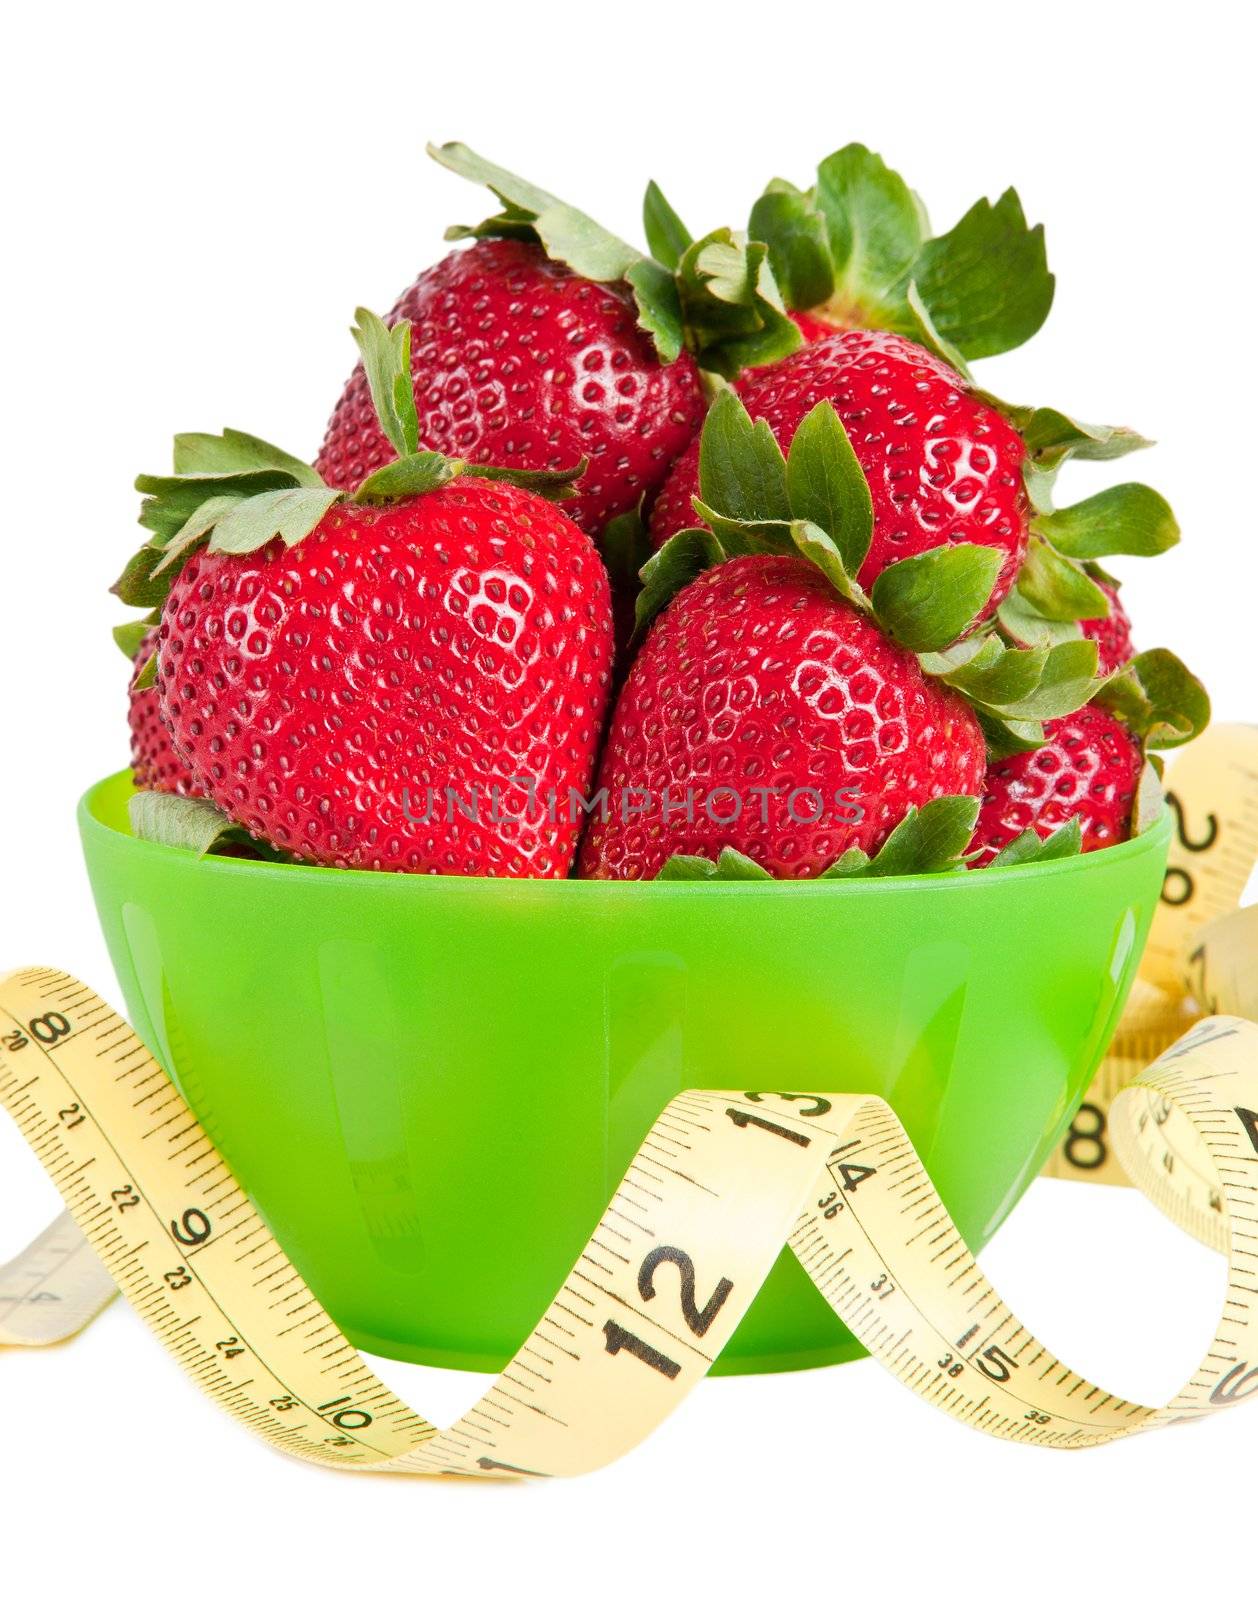 Strawberries and Measuring Tape by ruigsantos